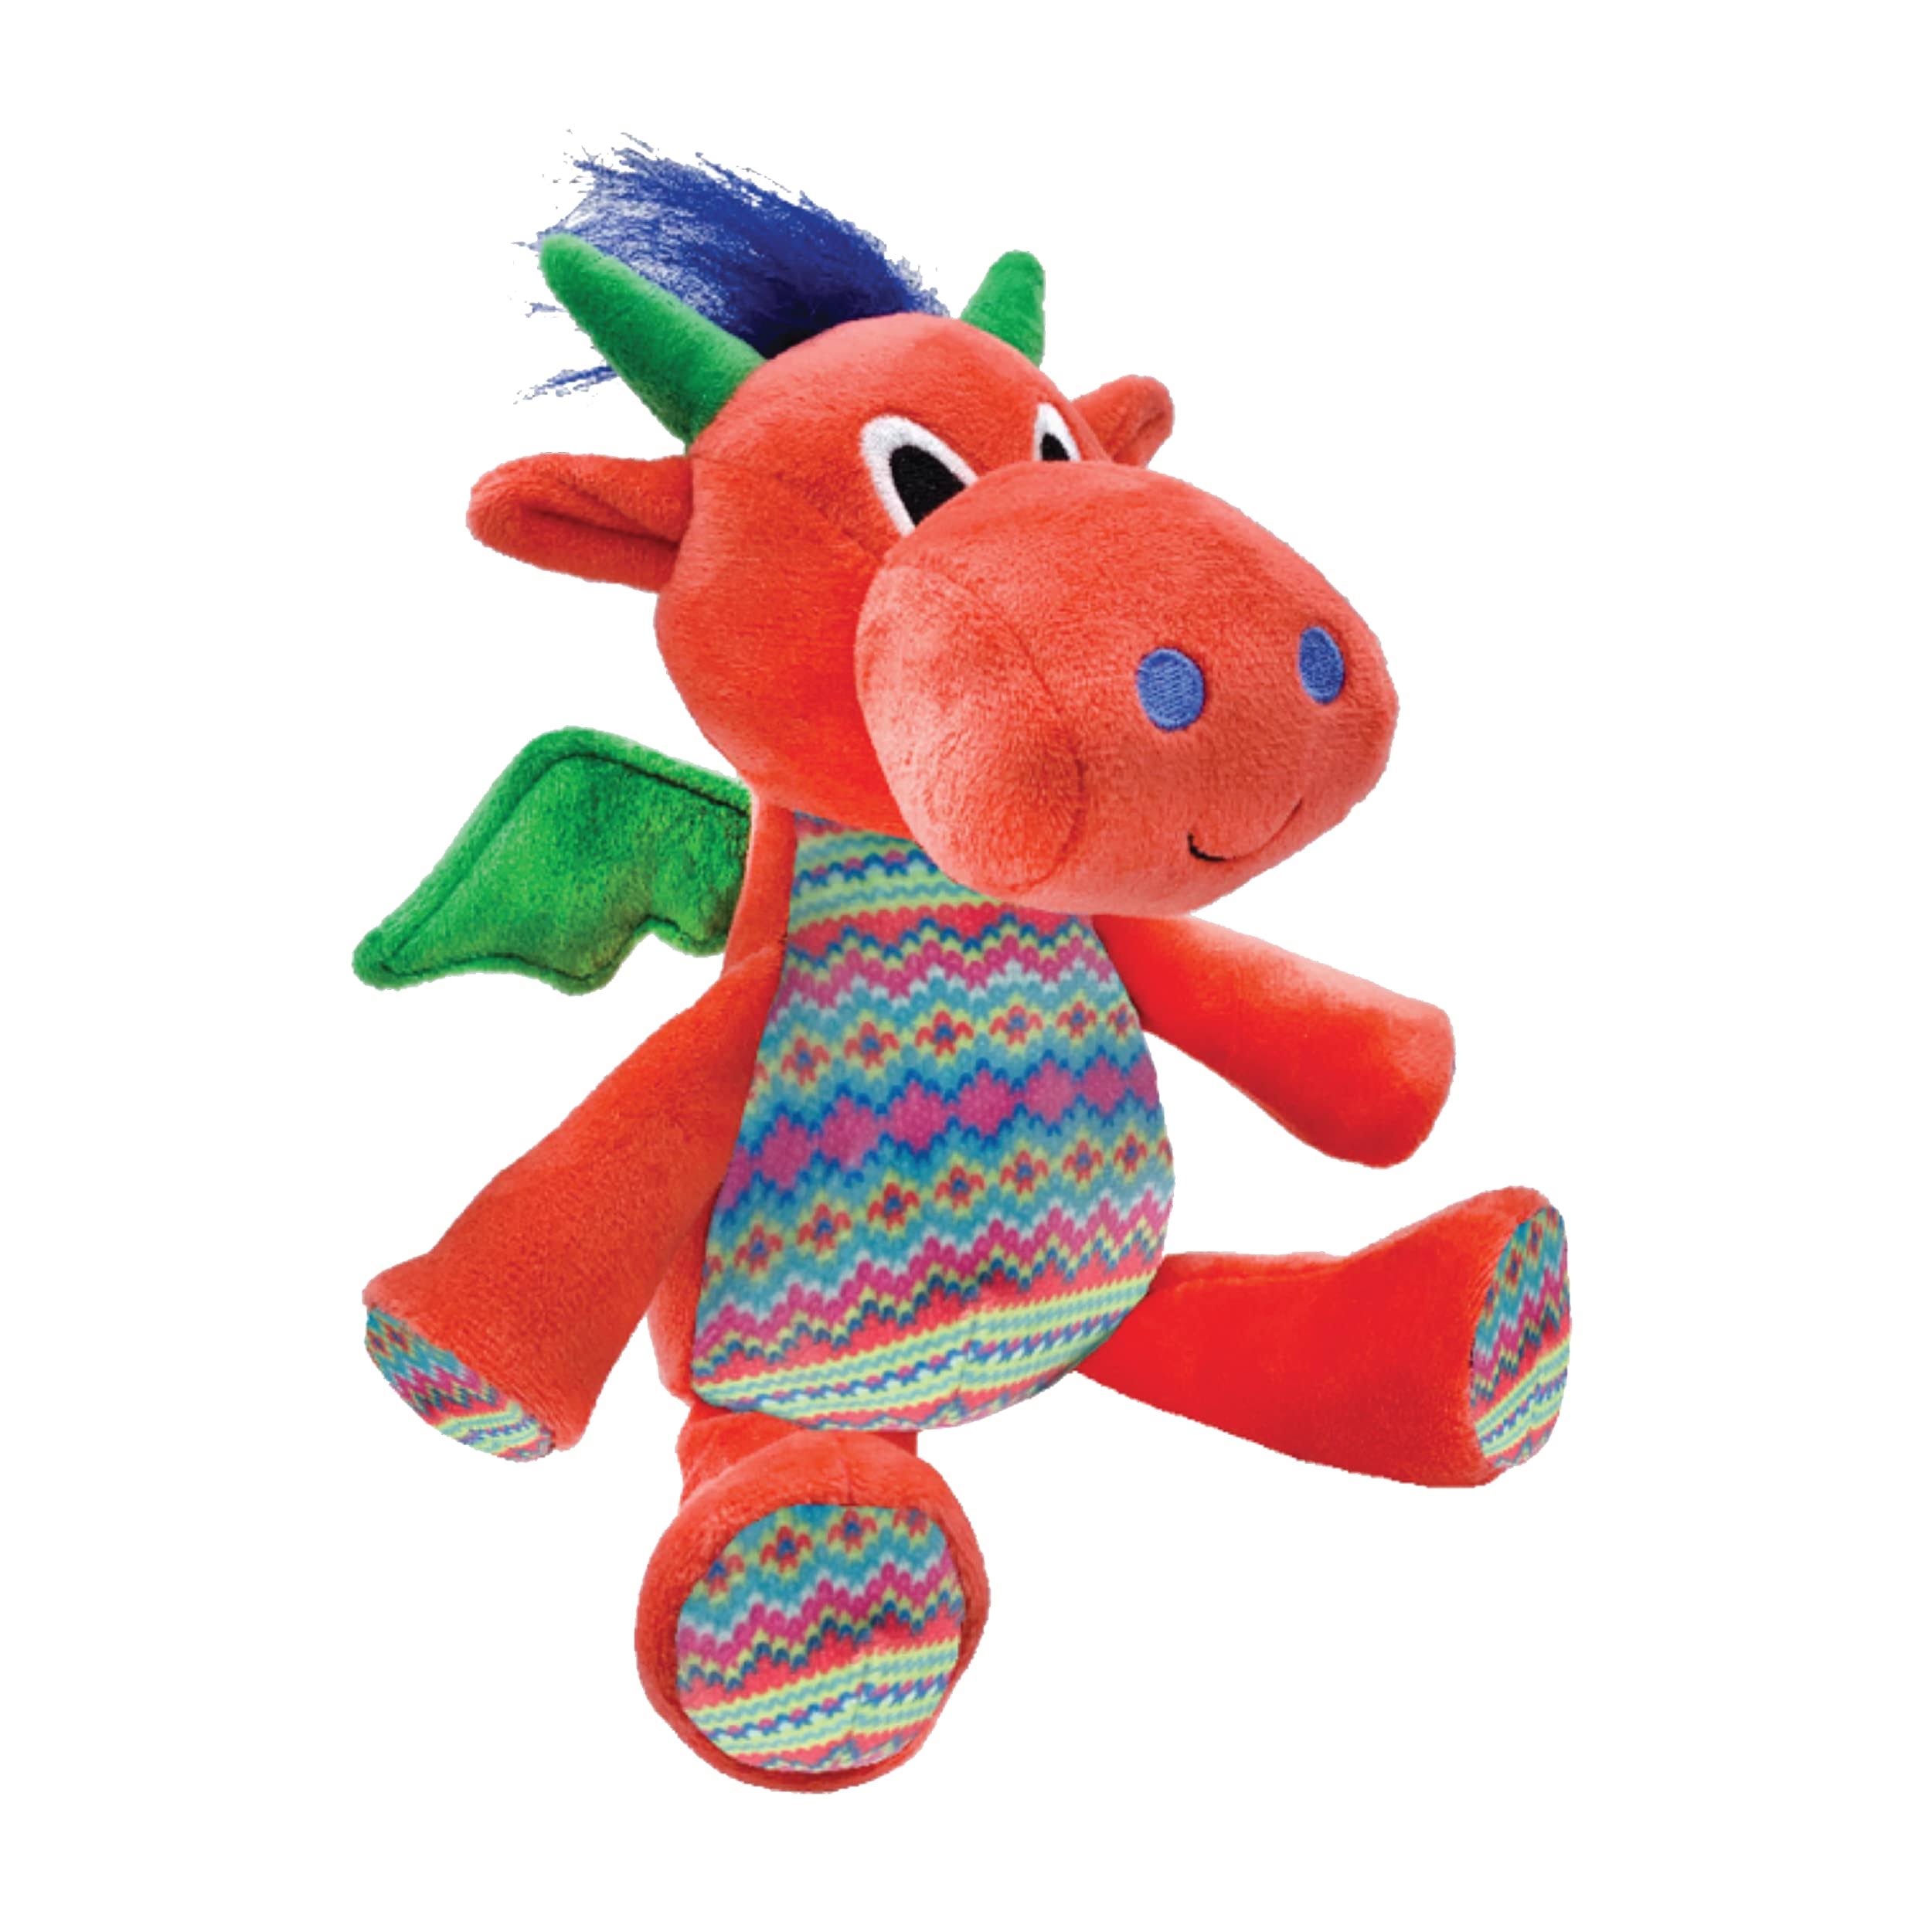 Lulubelles Holiday Power Plush Dog Toy - Fireball Dragon - Large